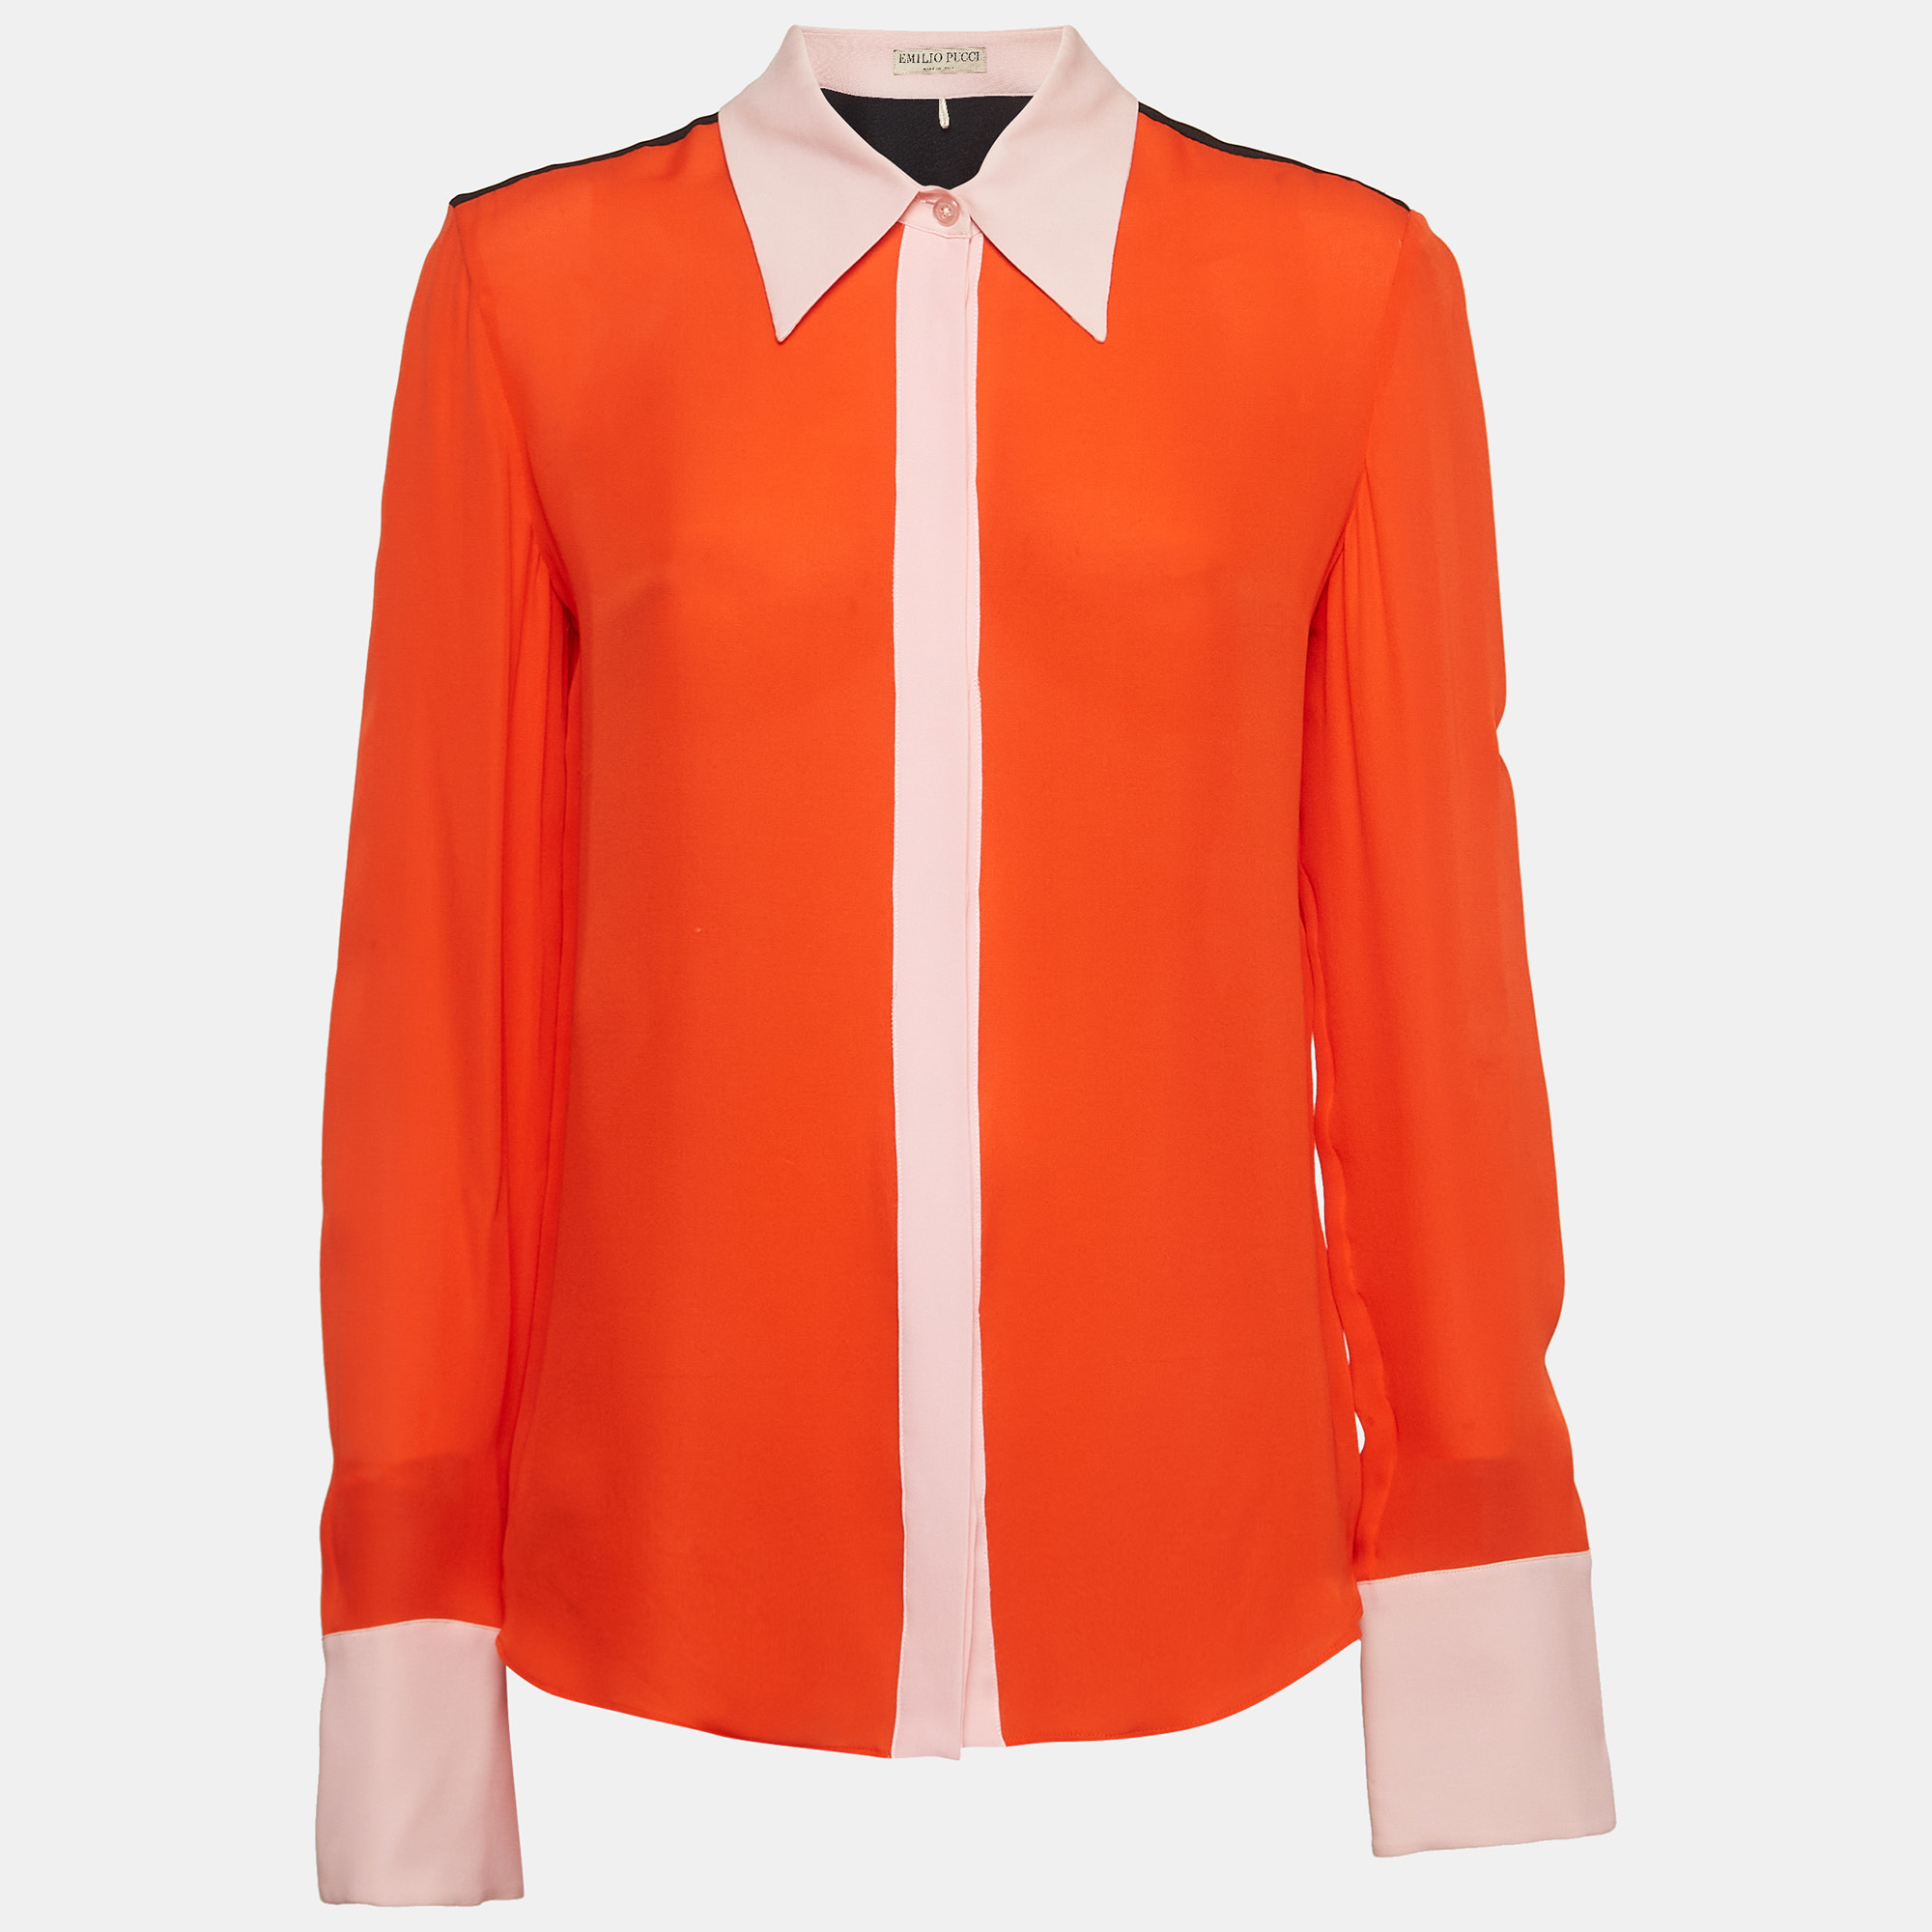 Emilio pucci orange silk contrast trim shirt m